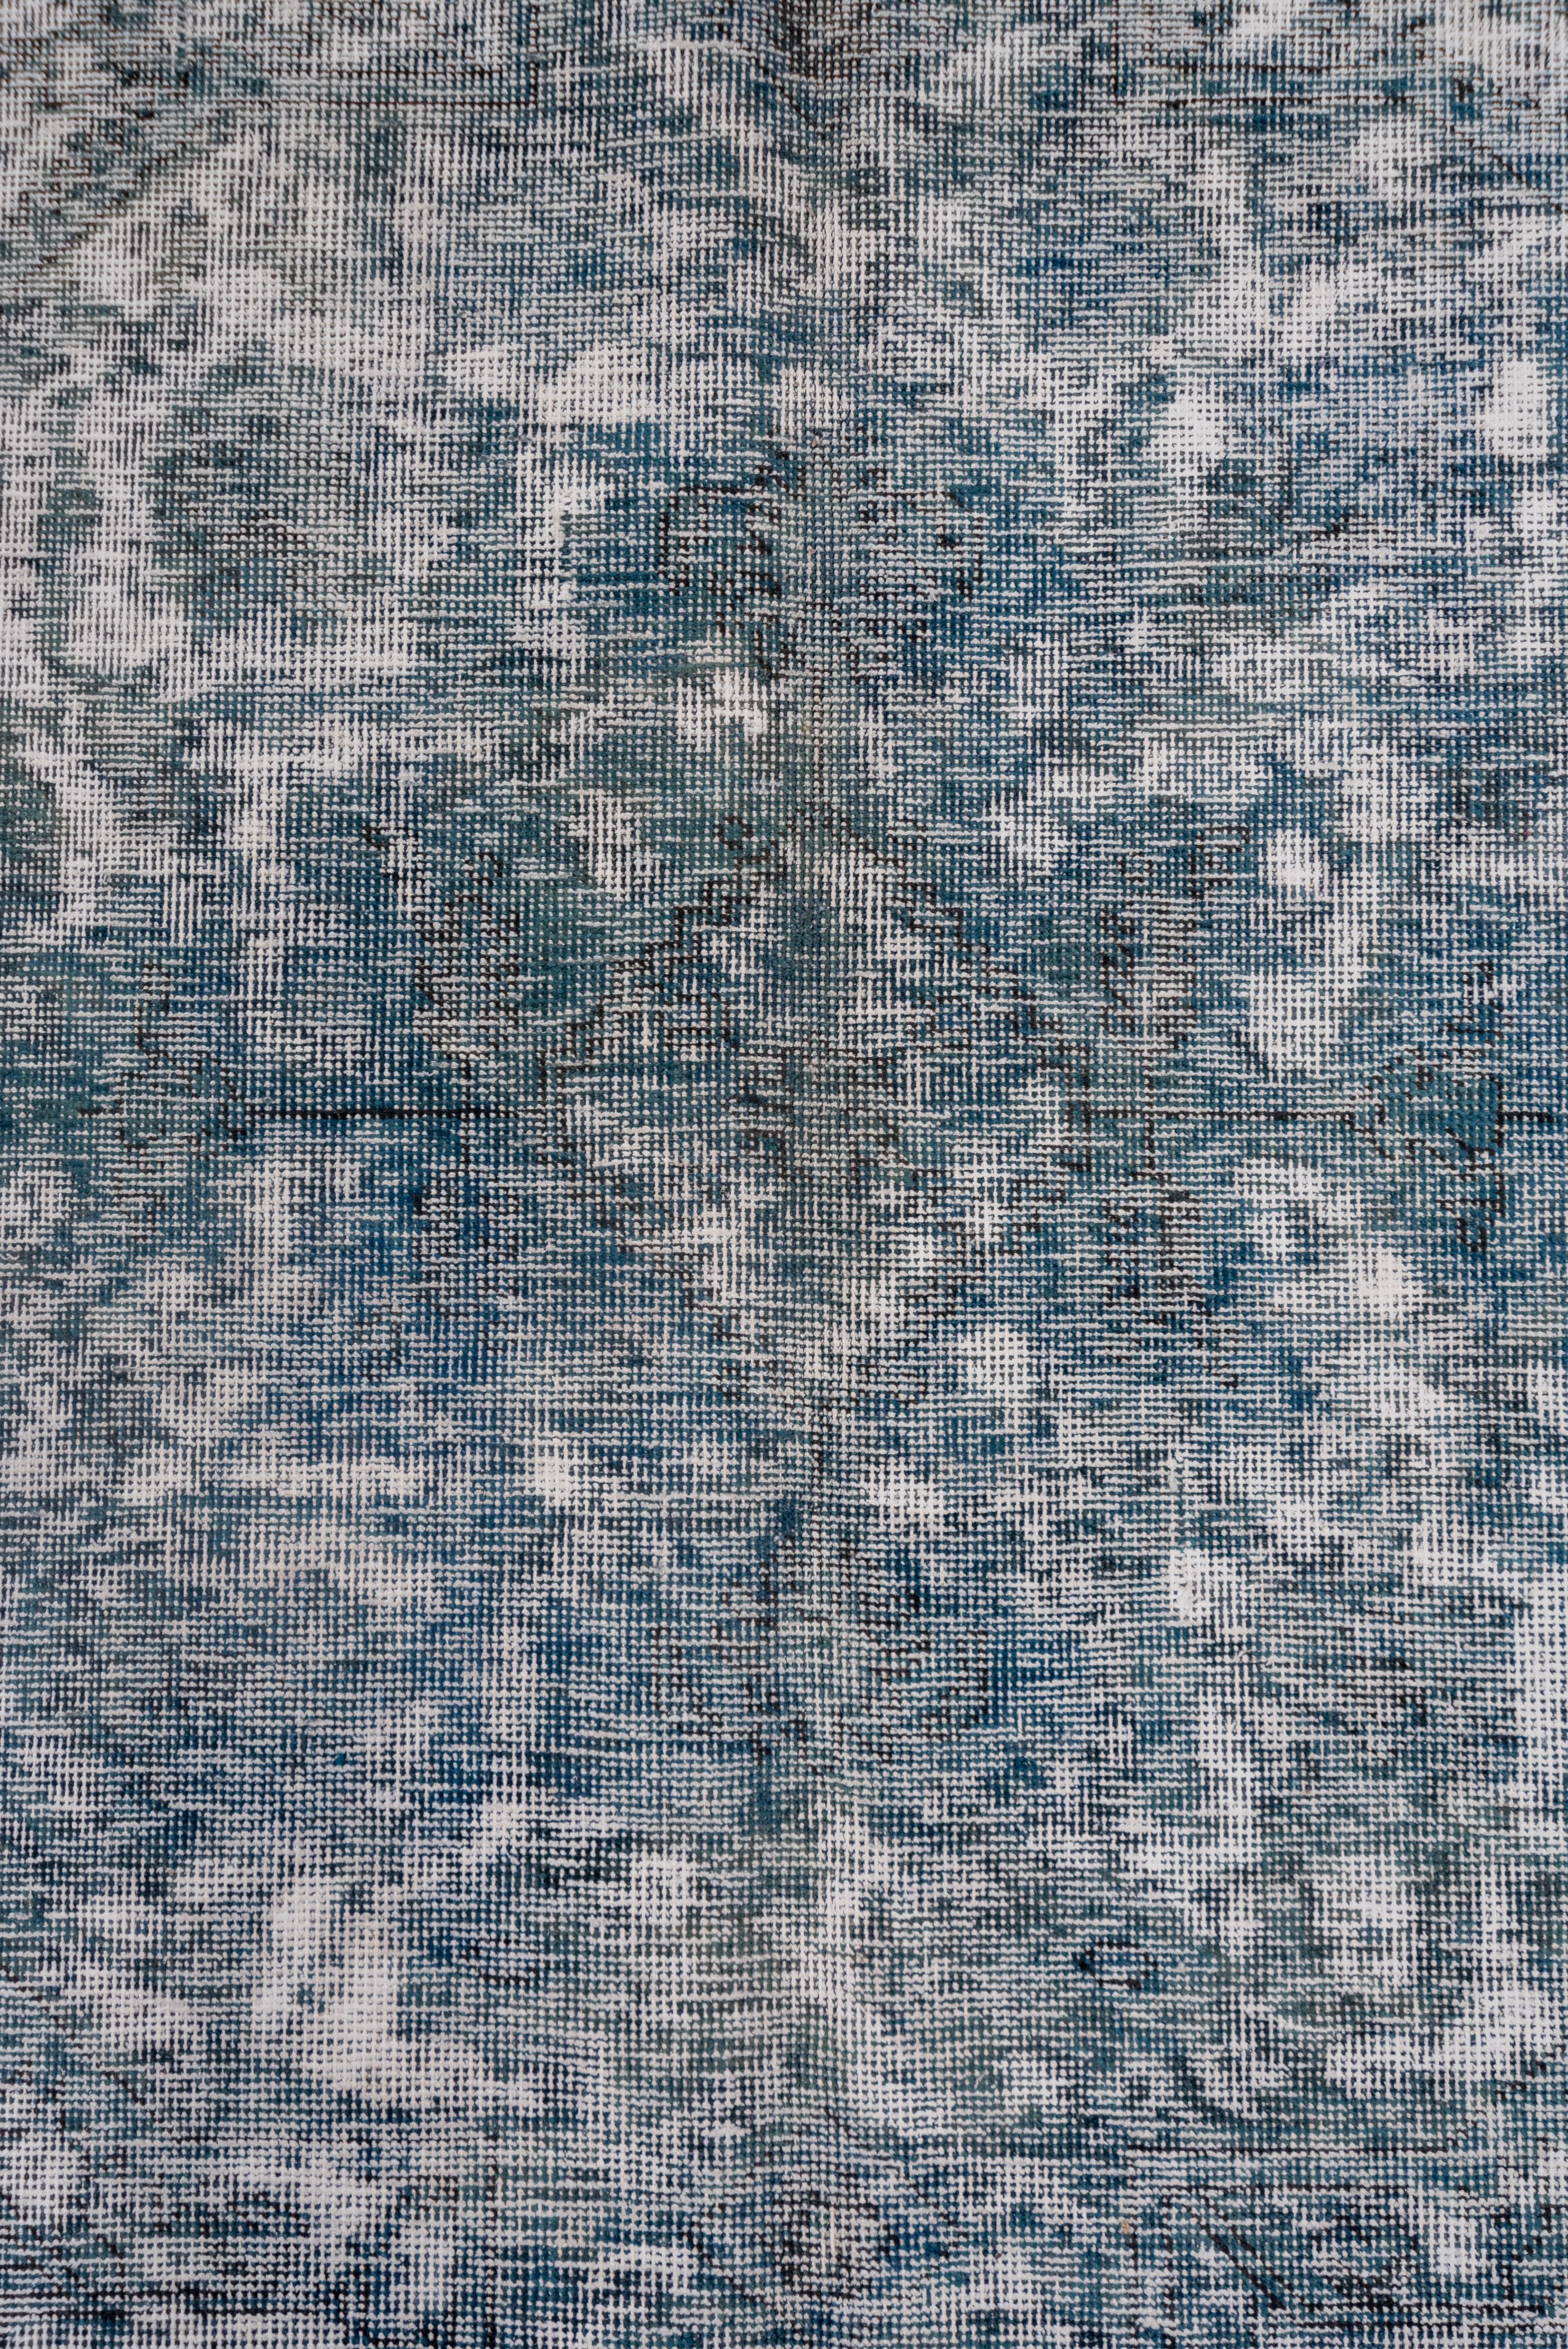 Übergefärbter Teppich im Used-Look, blau + grüne Palette (Moderne)